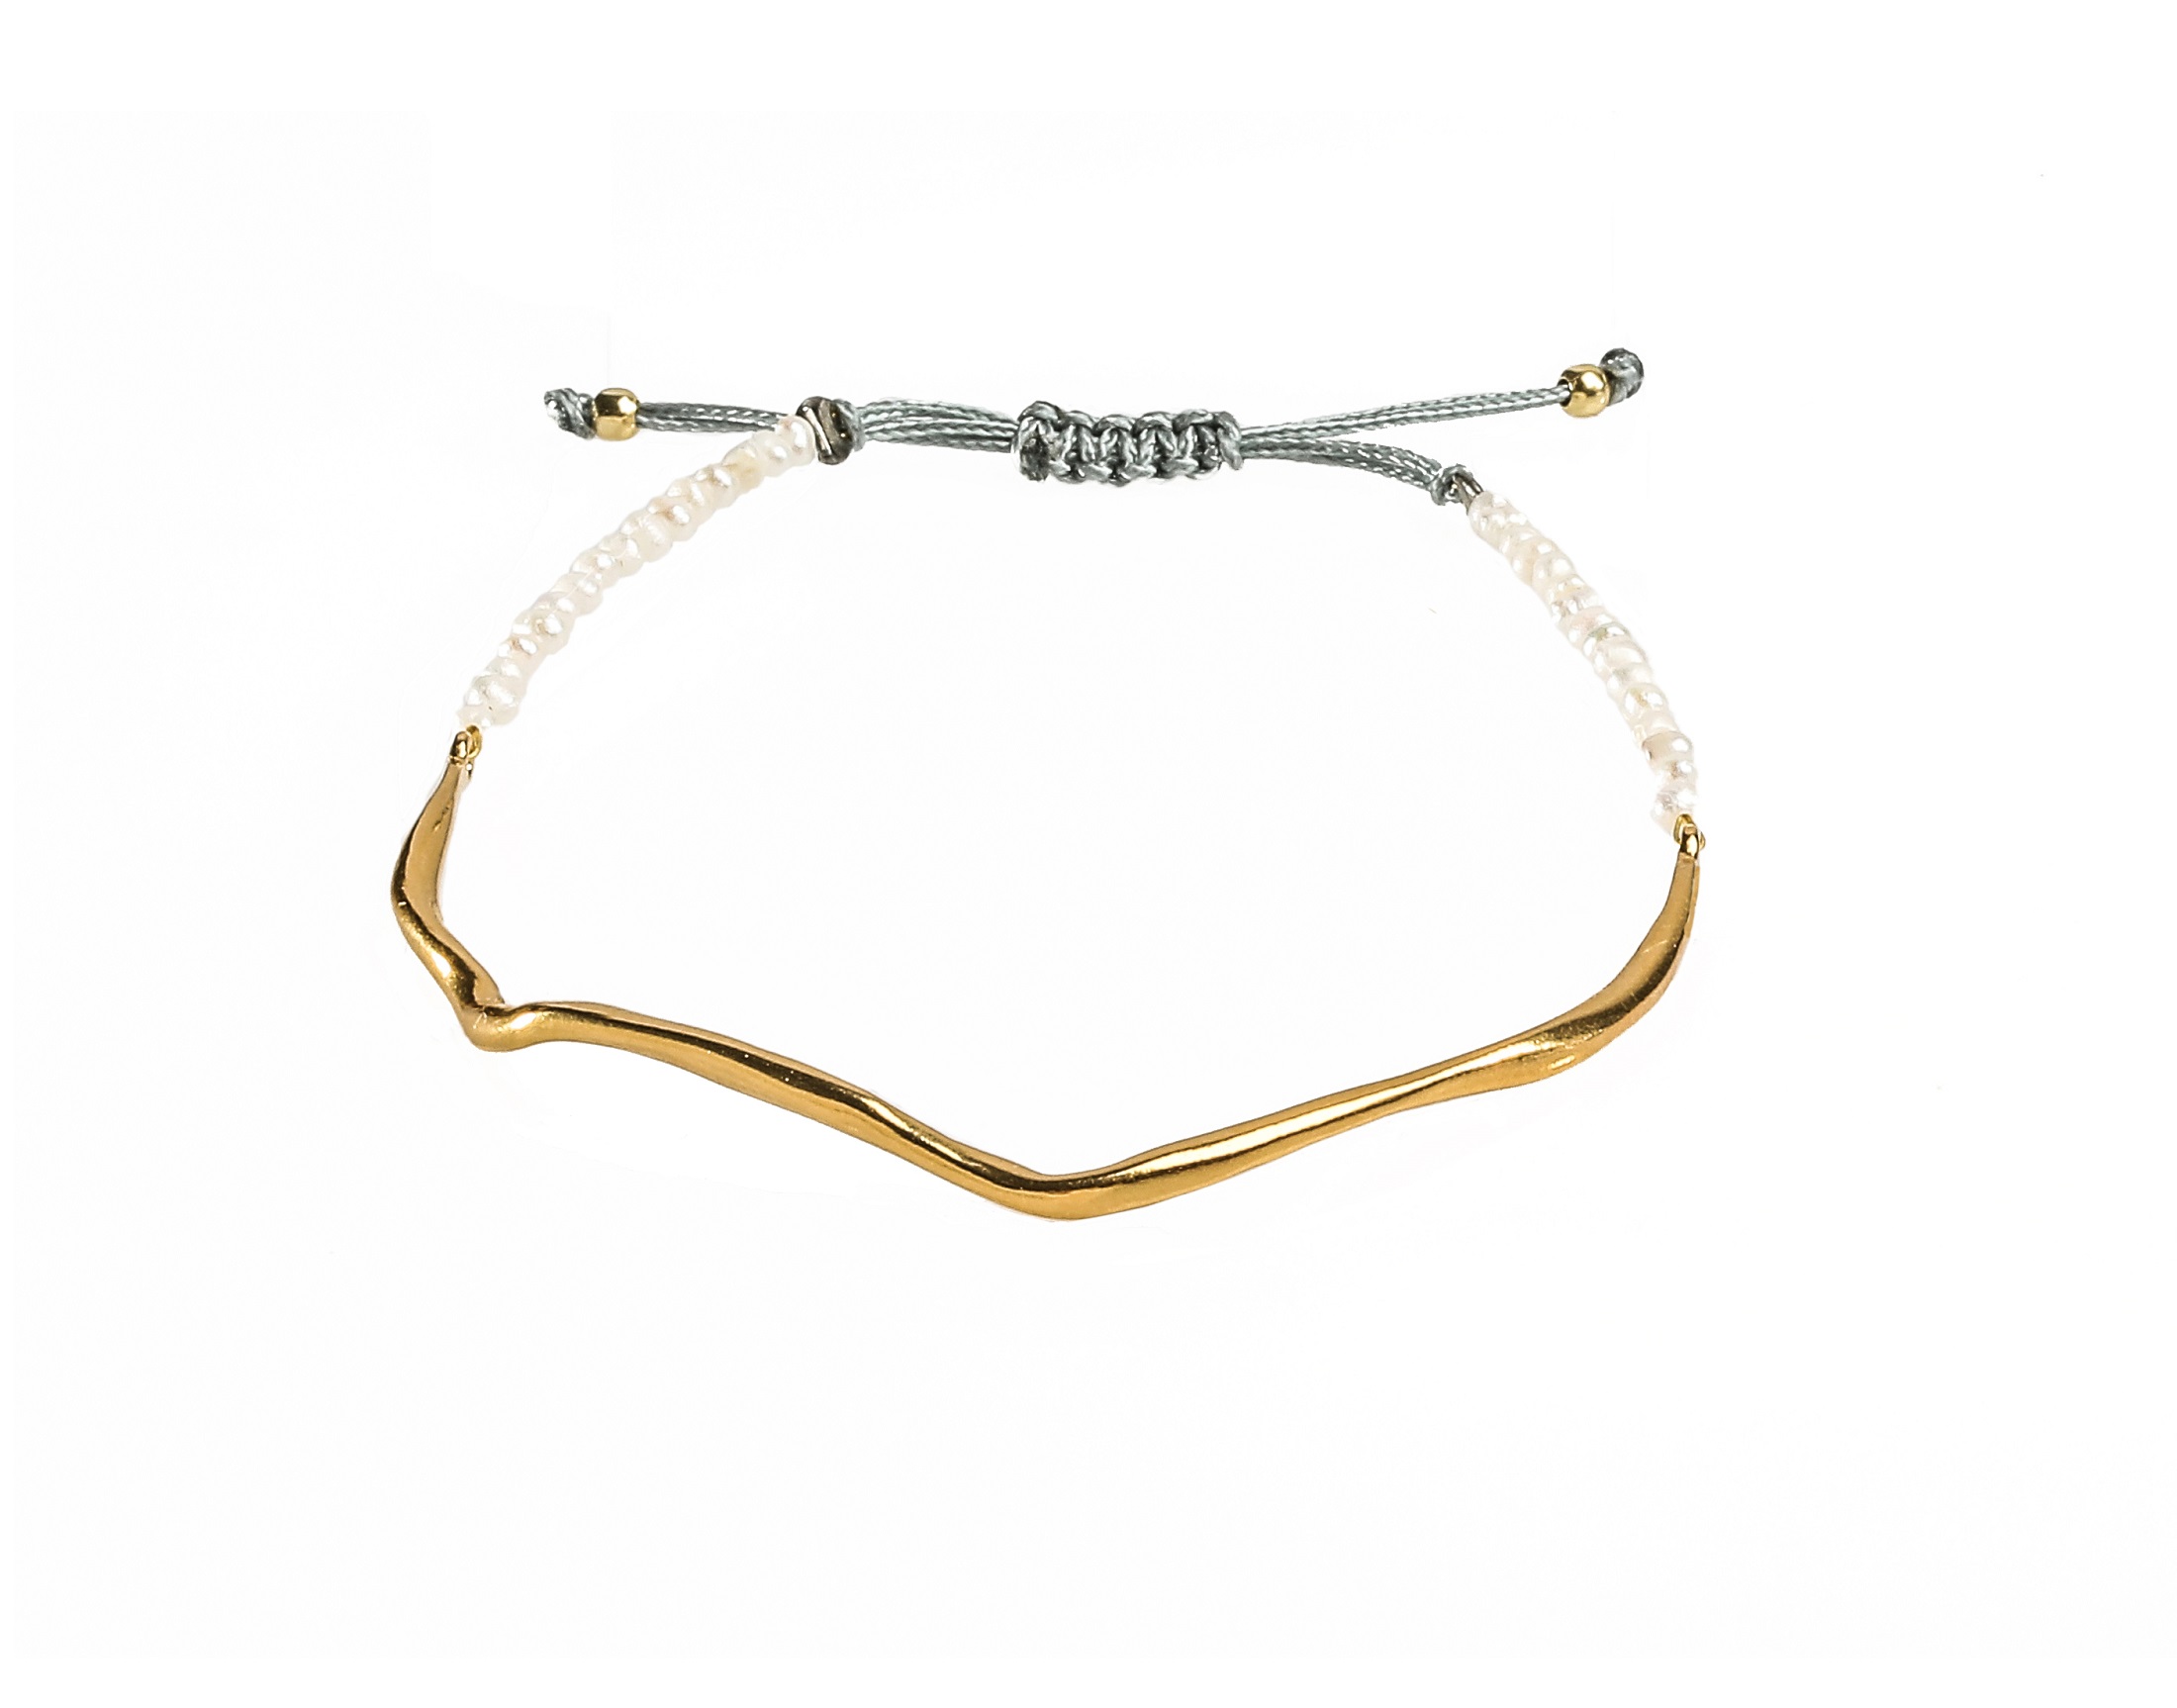 SEAWOOD Bracelet - Gold pl. Silver & Pearls | Danai Giannelli